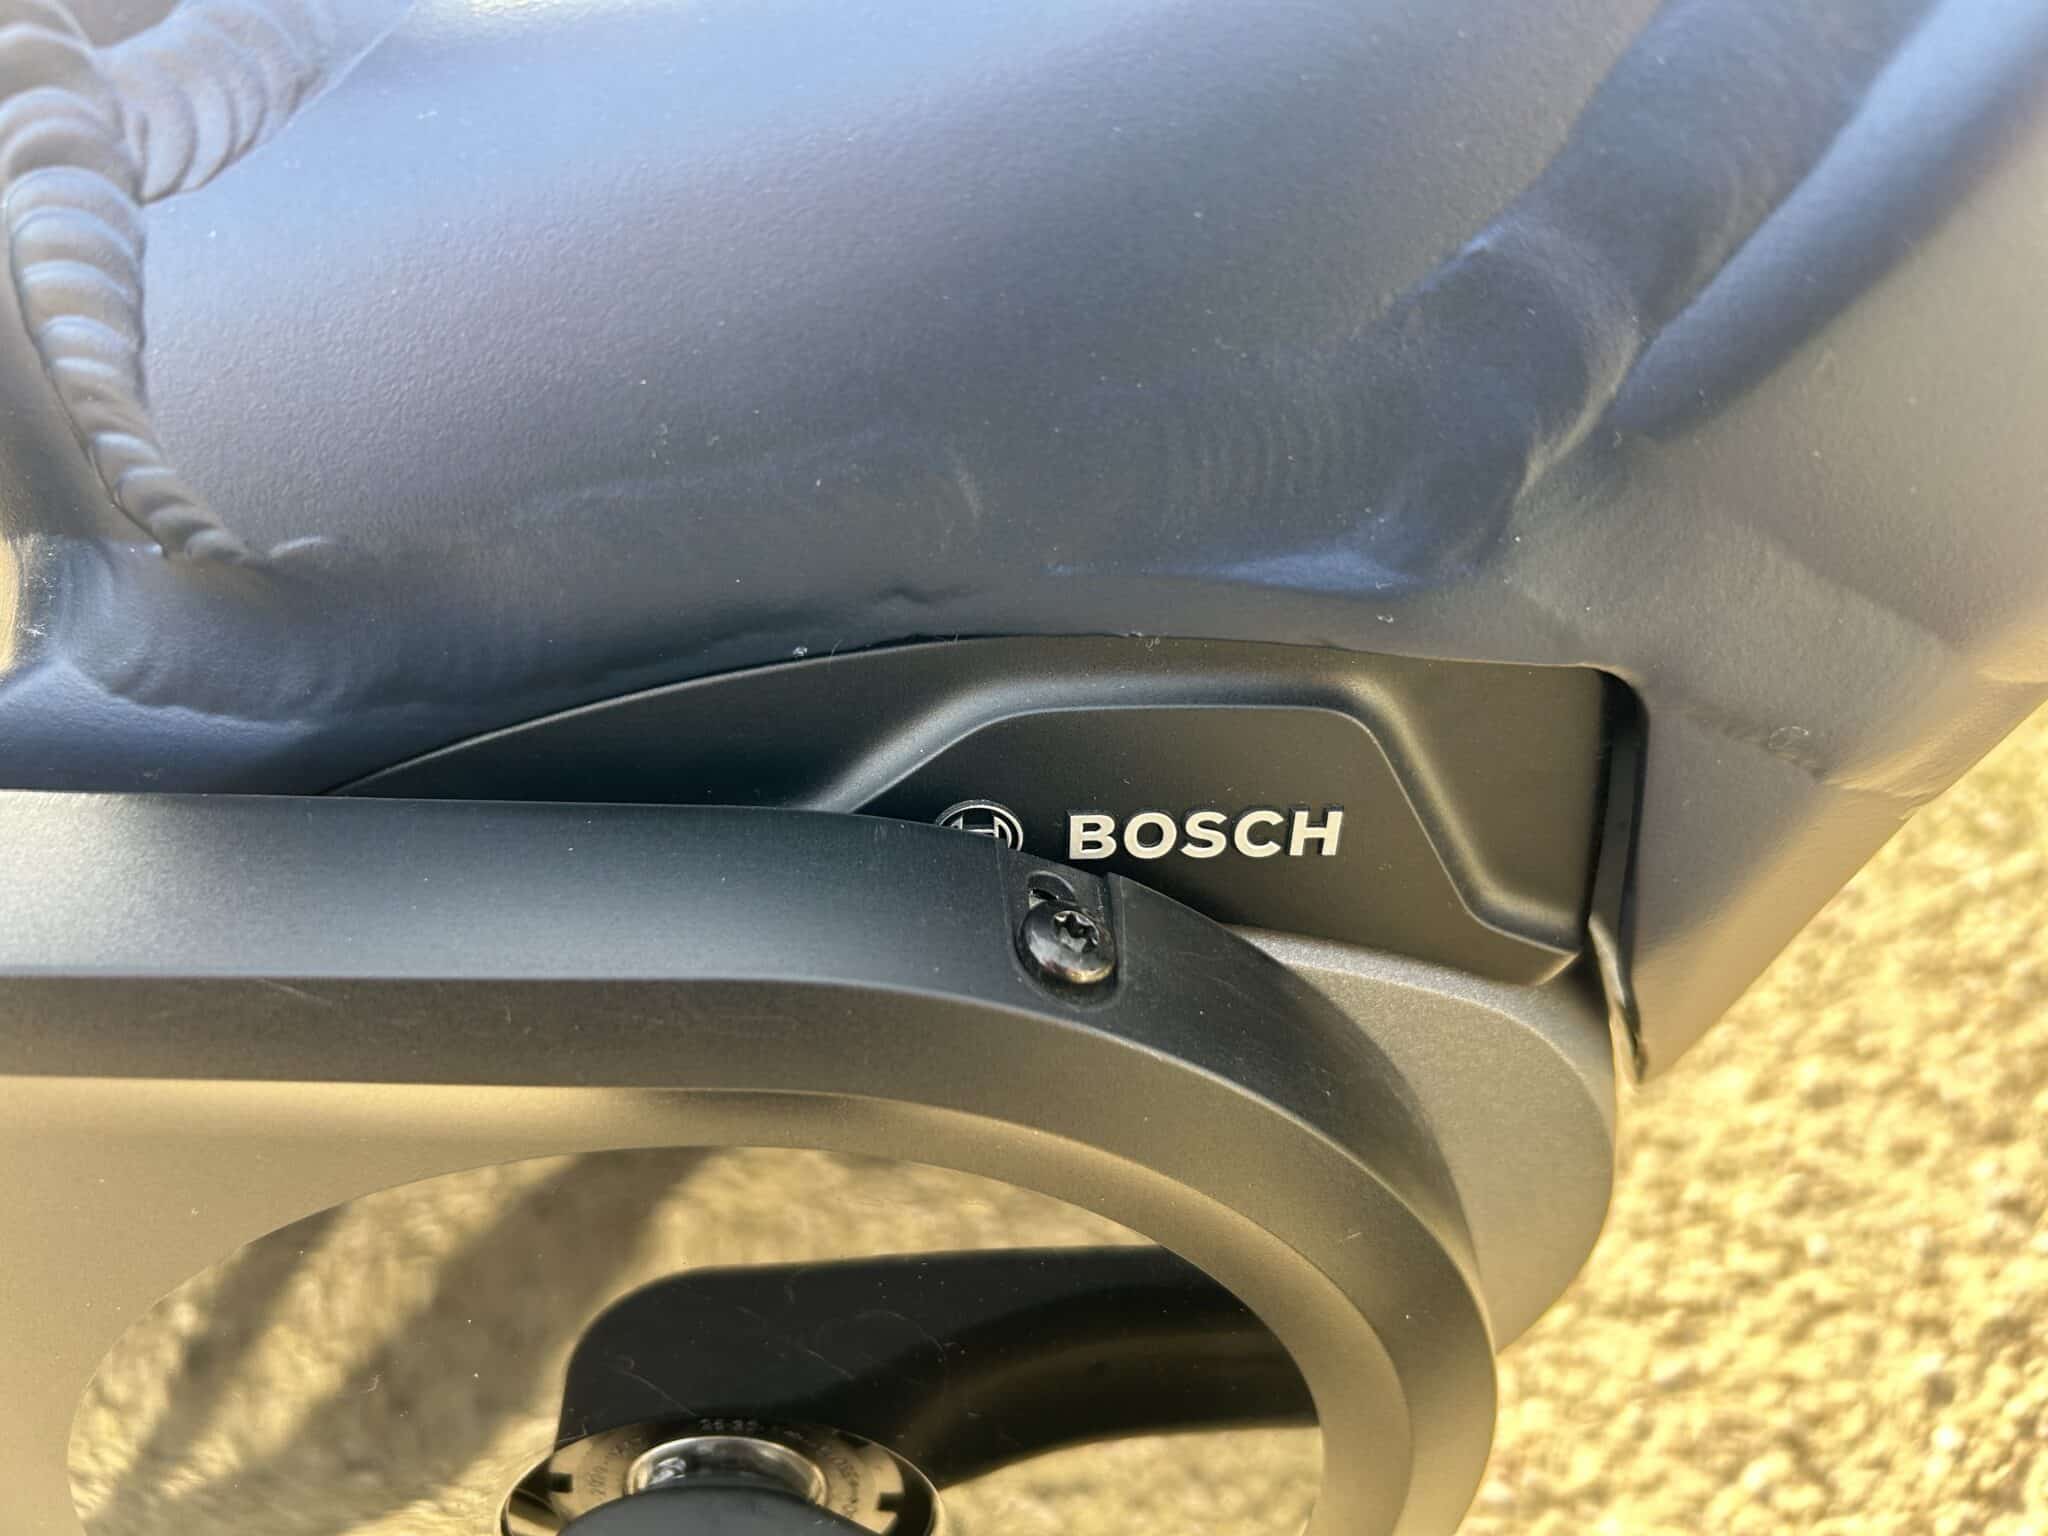 Powered by Bosch